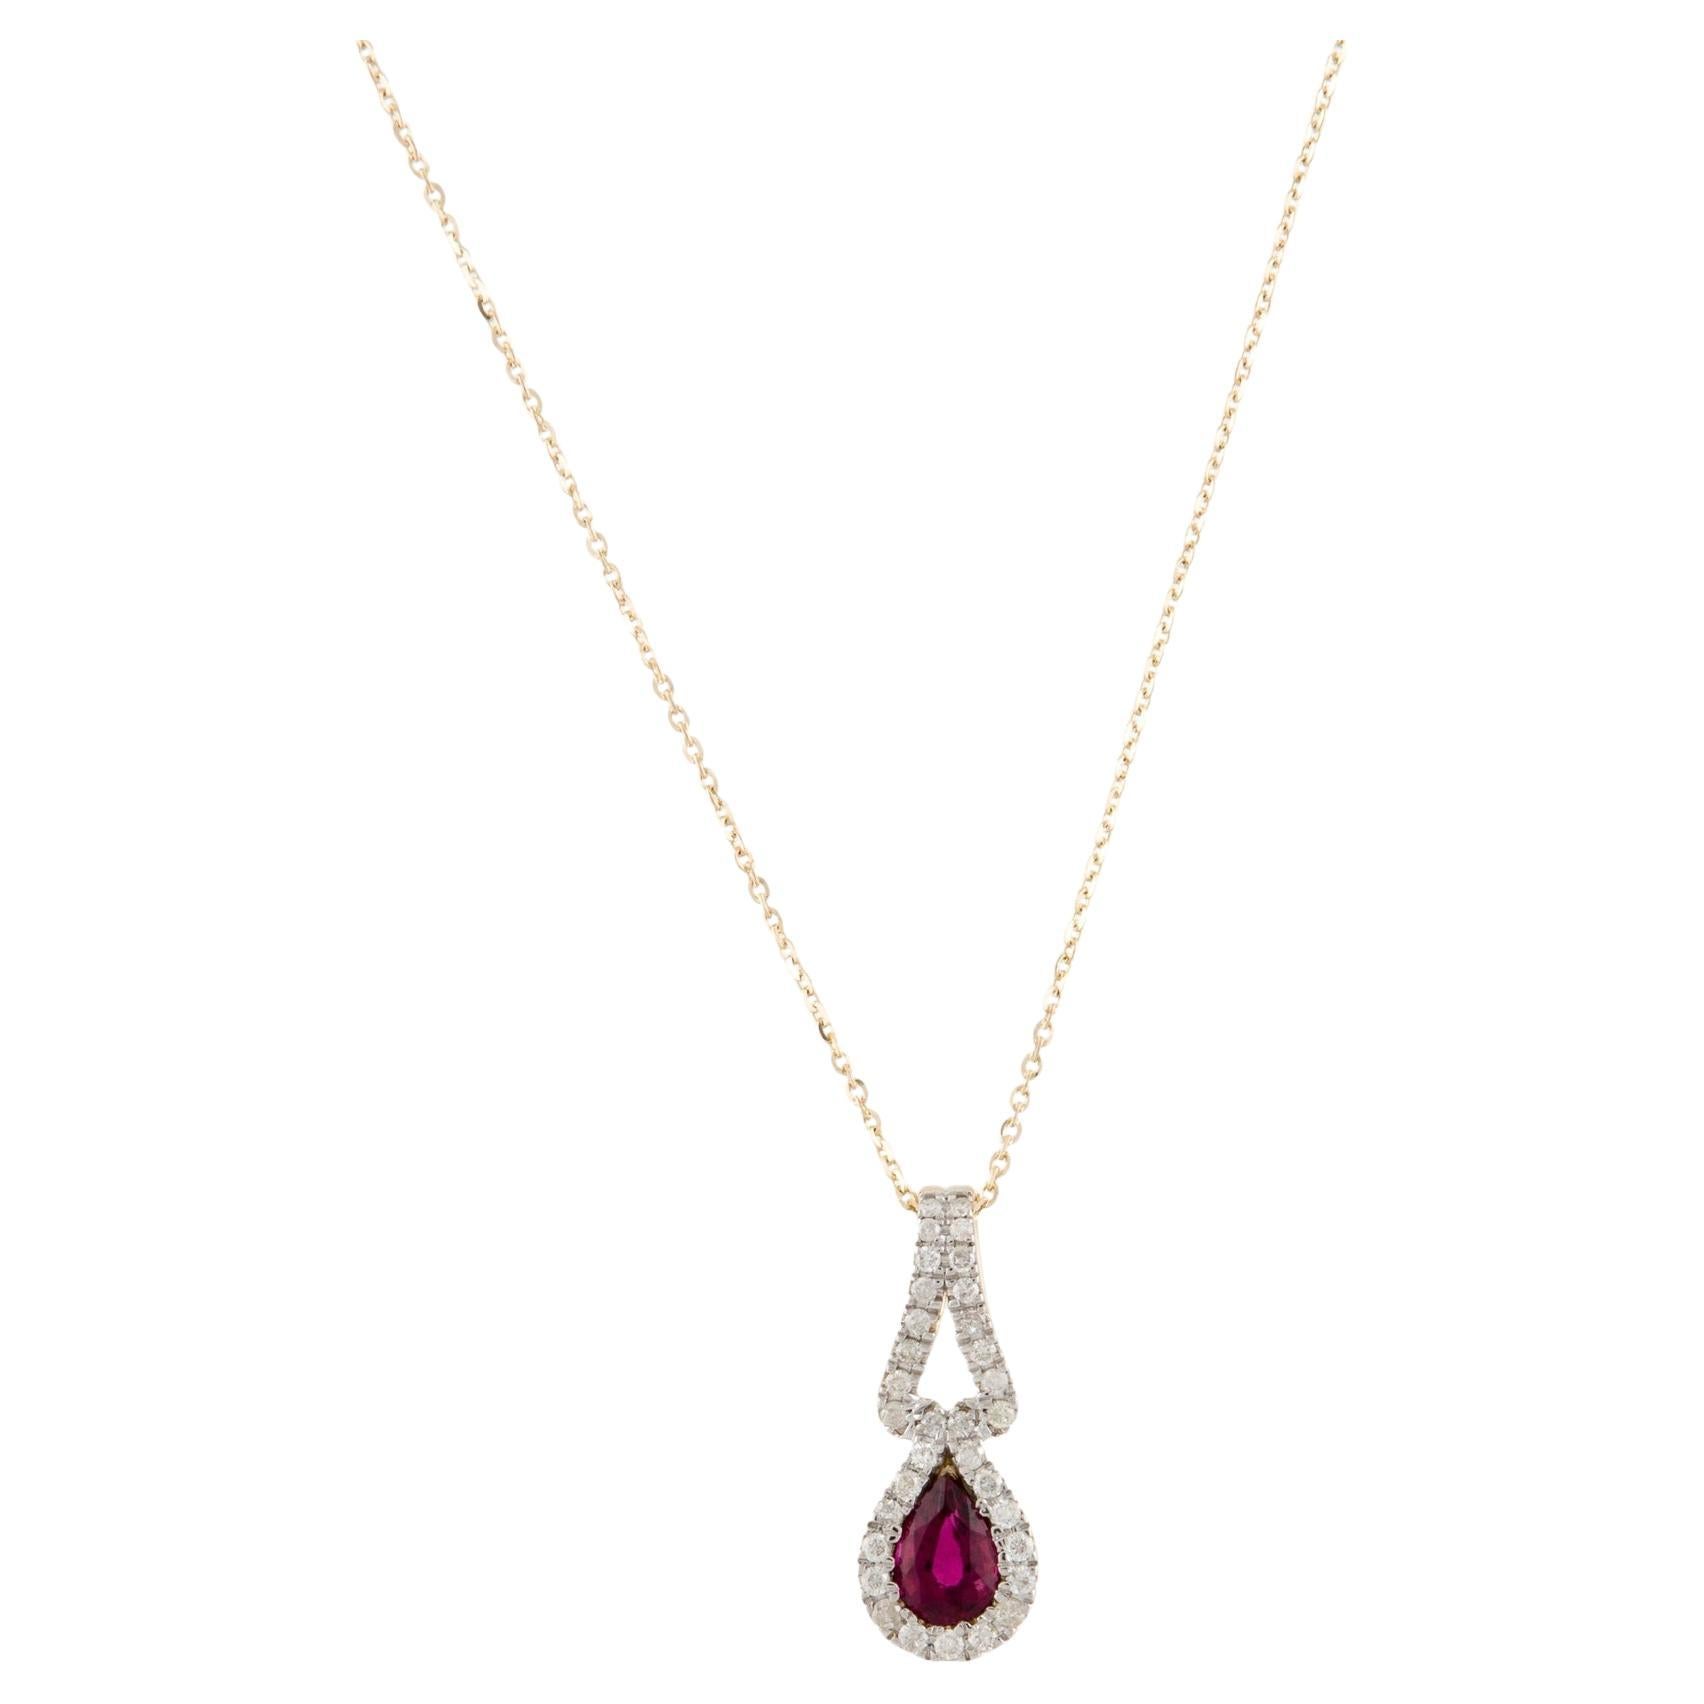 14K Rubellite & Diamond Drop Pendant Necklace - Exquisite Gemstone Statement